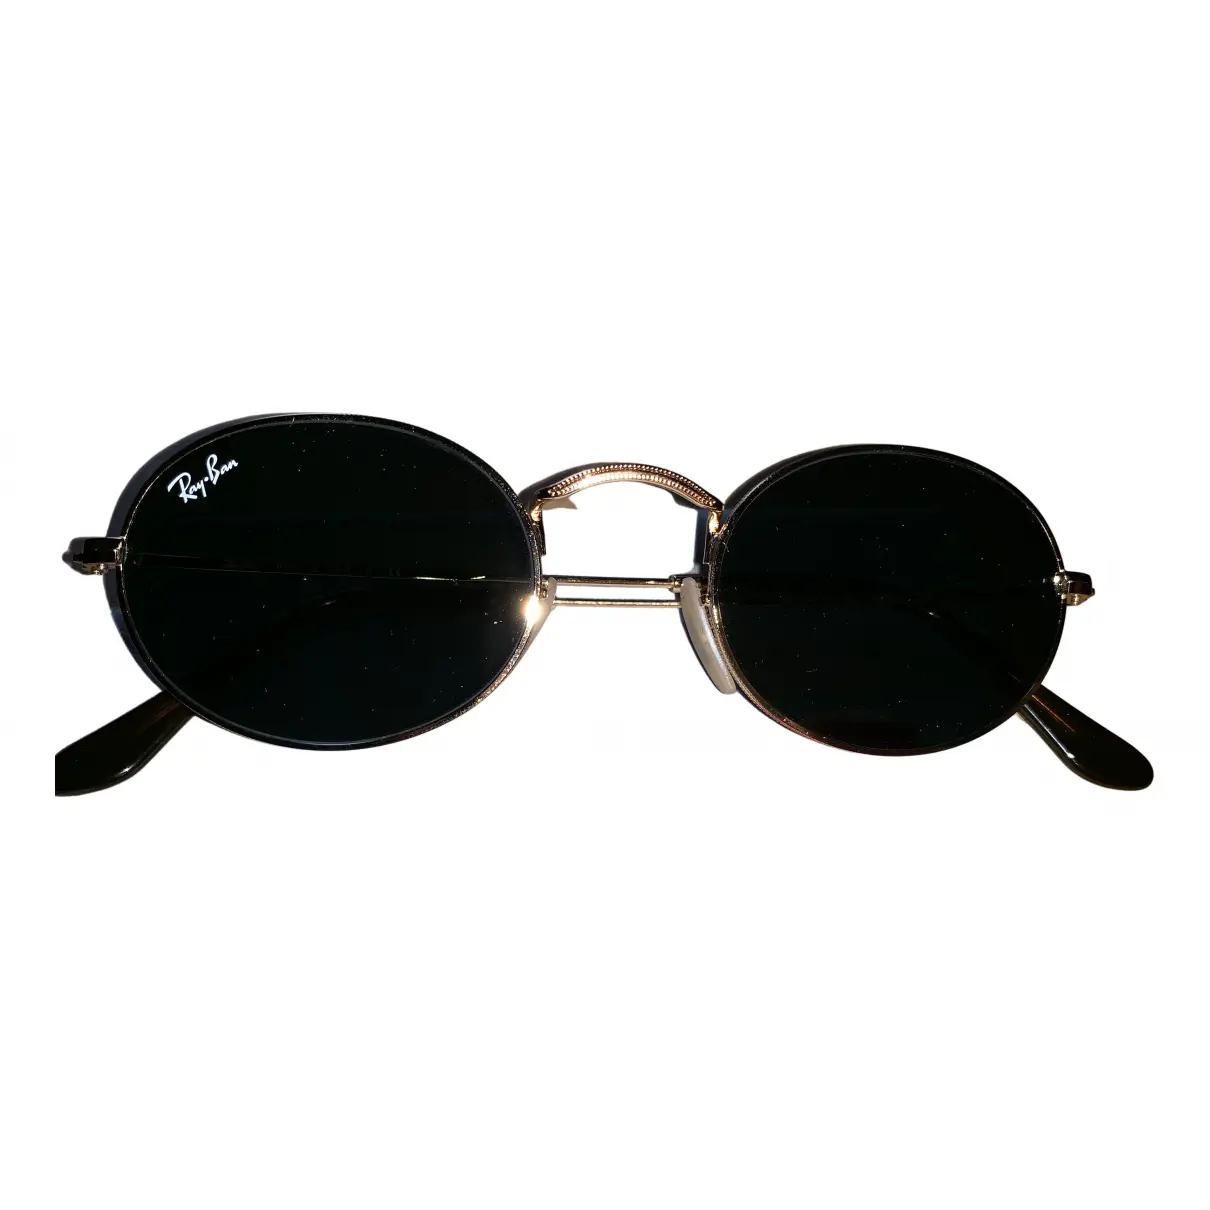 Oval sunglasses Ray-Ban